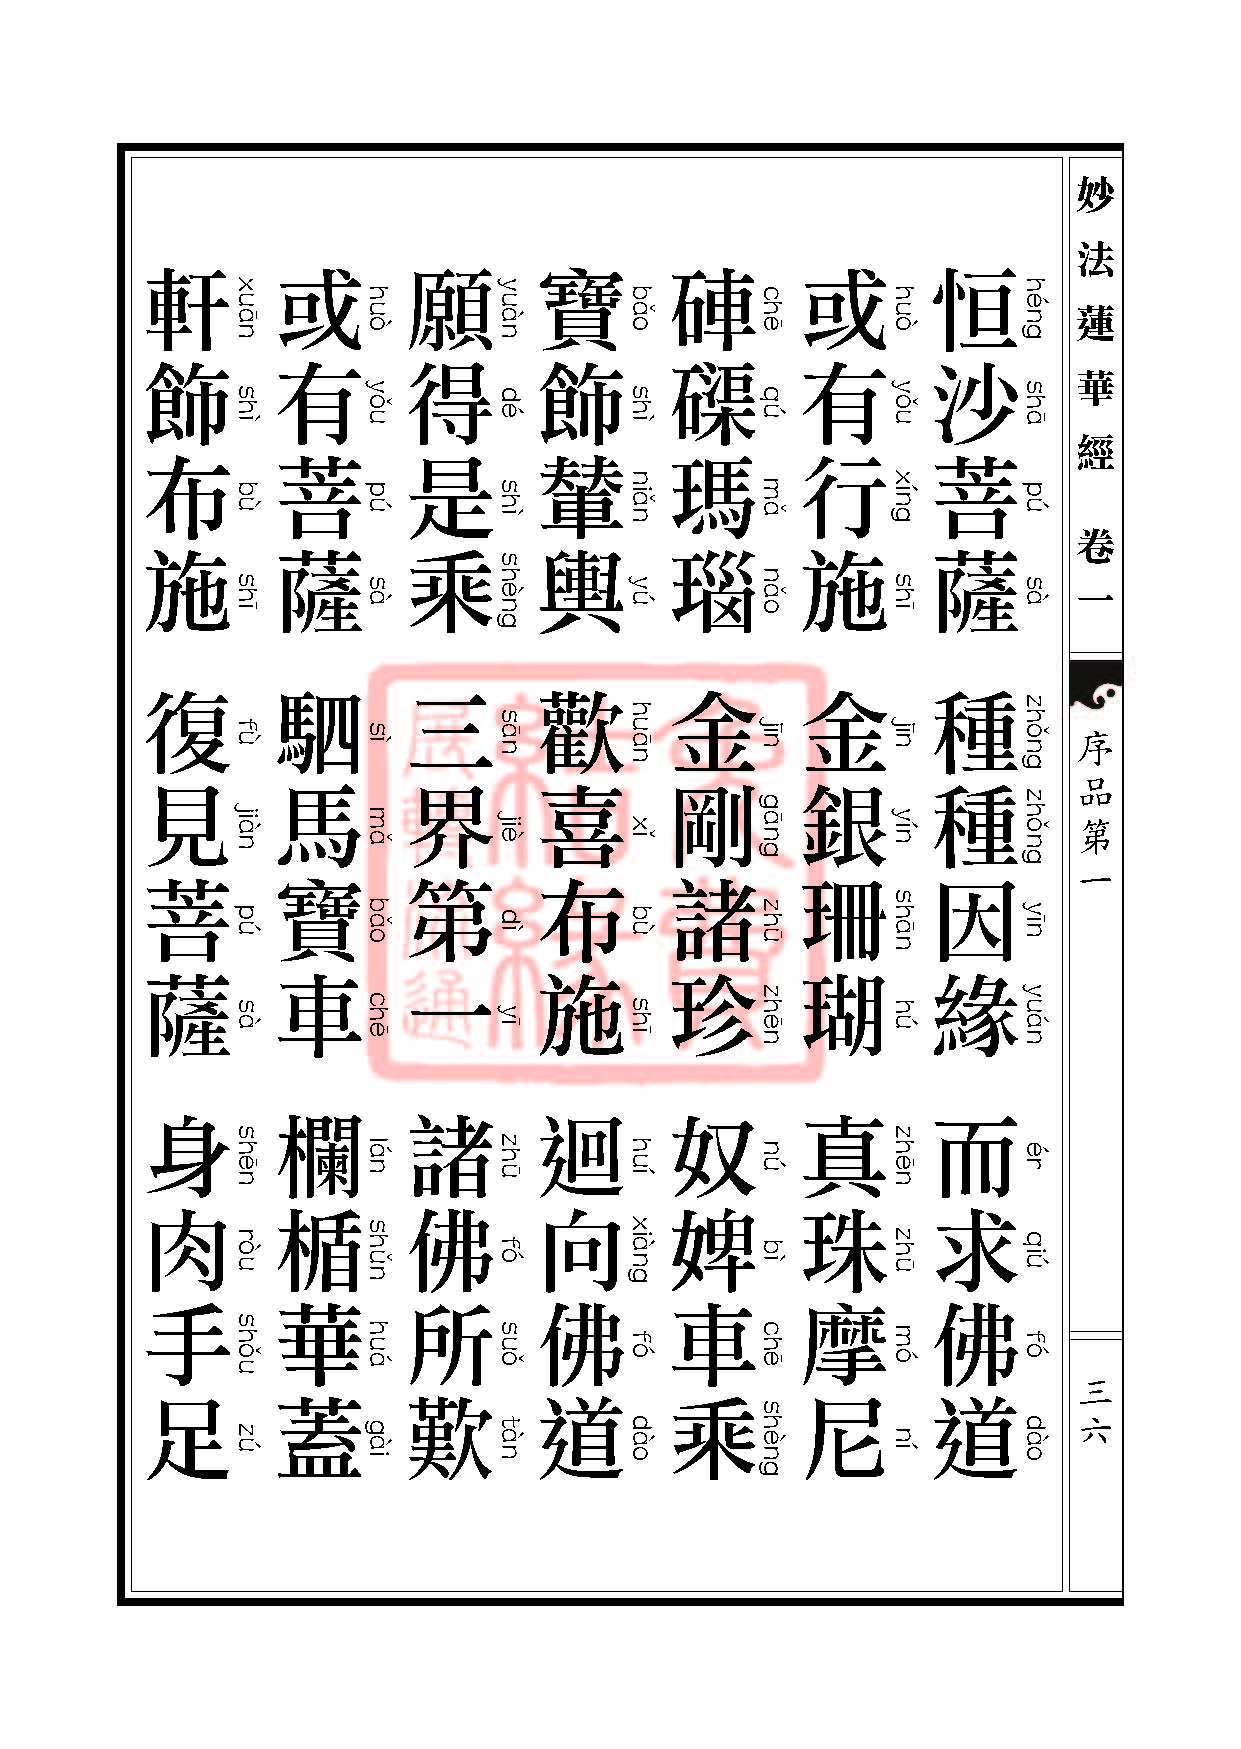 Book_FHJ_HK-A6-PY_Web_页面_036.jpg